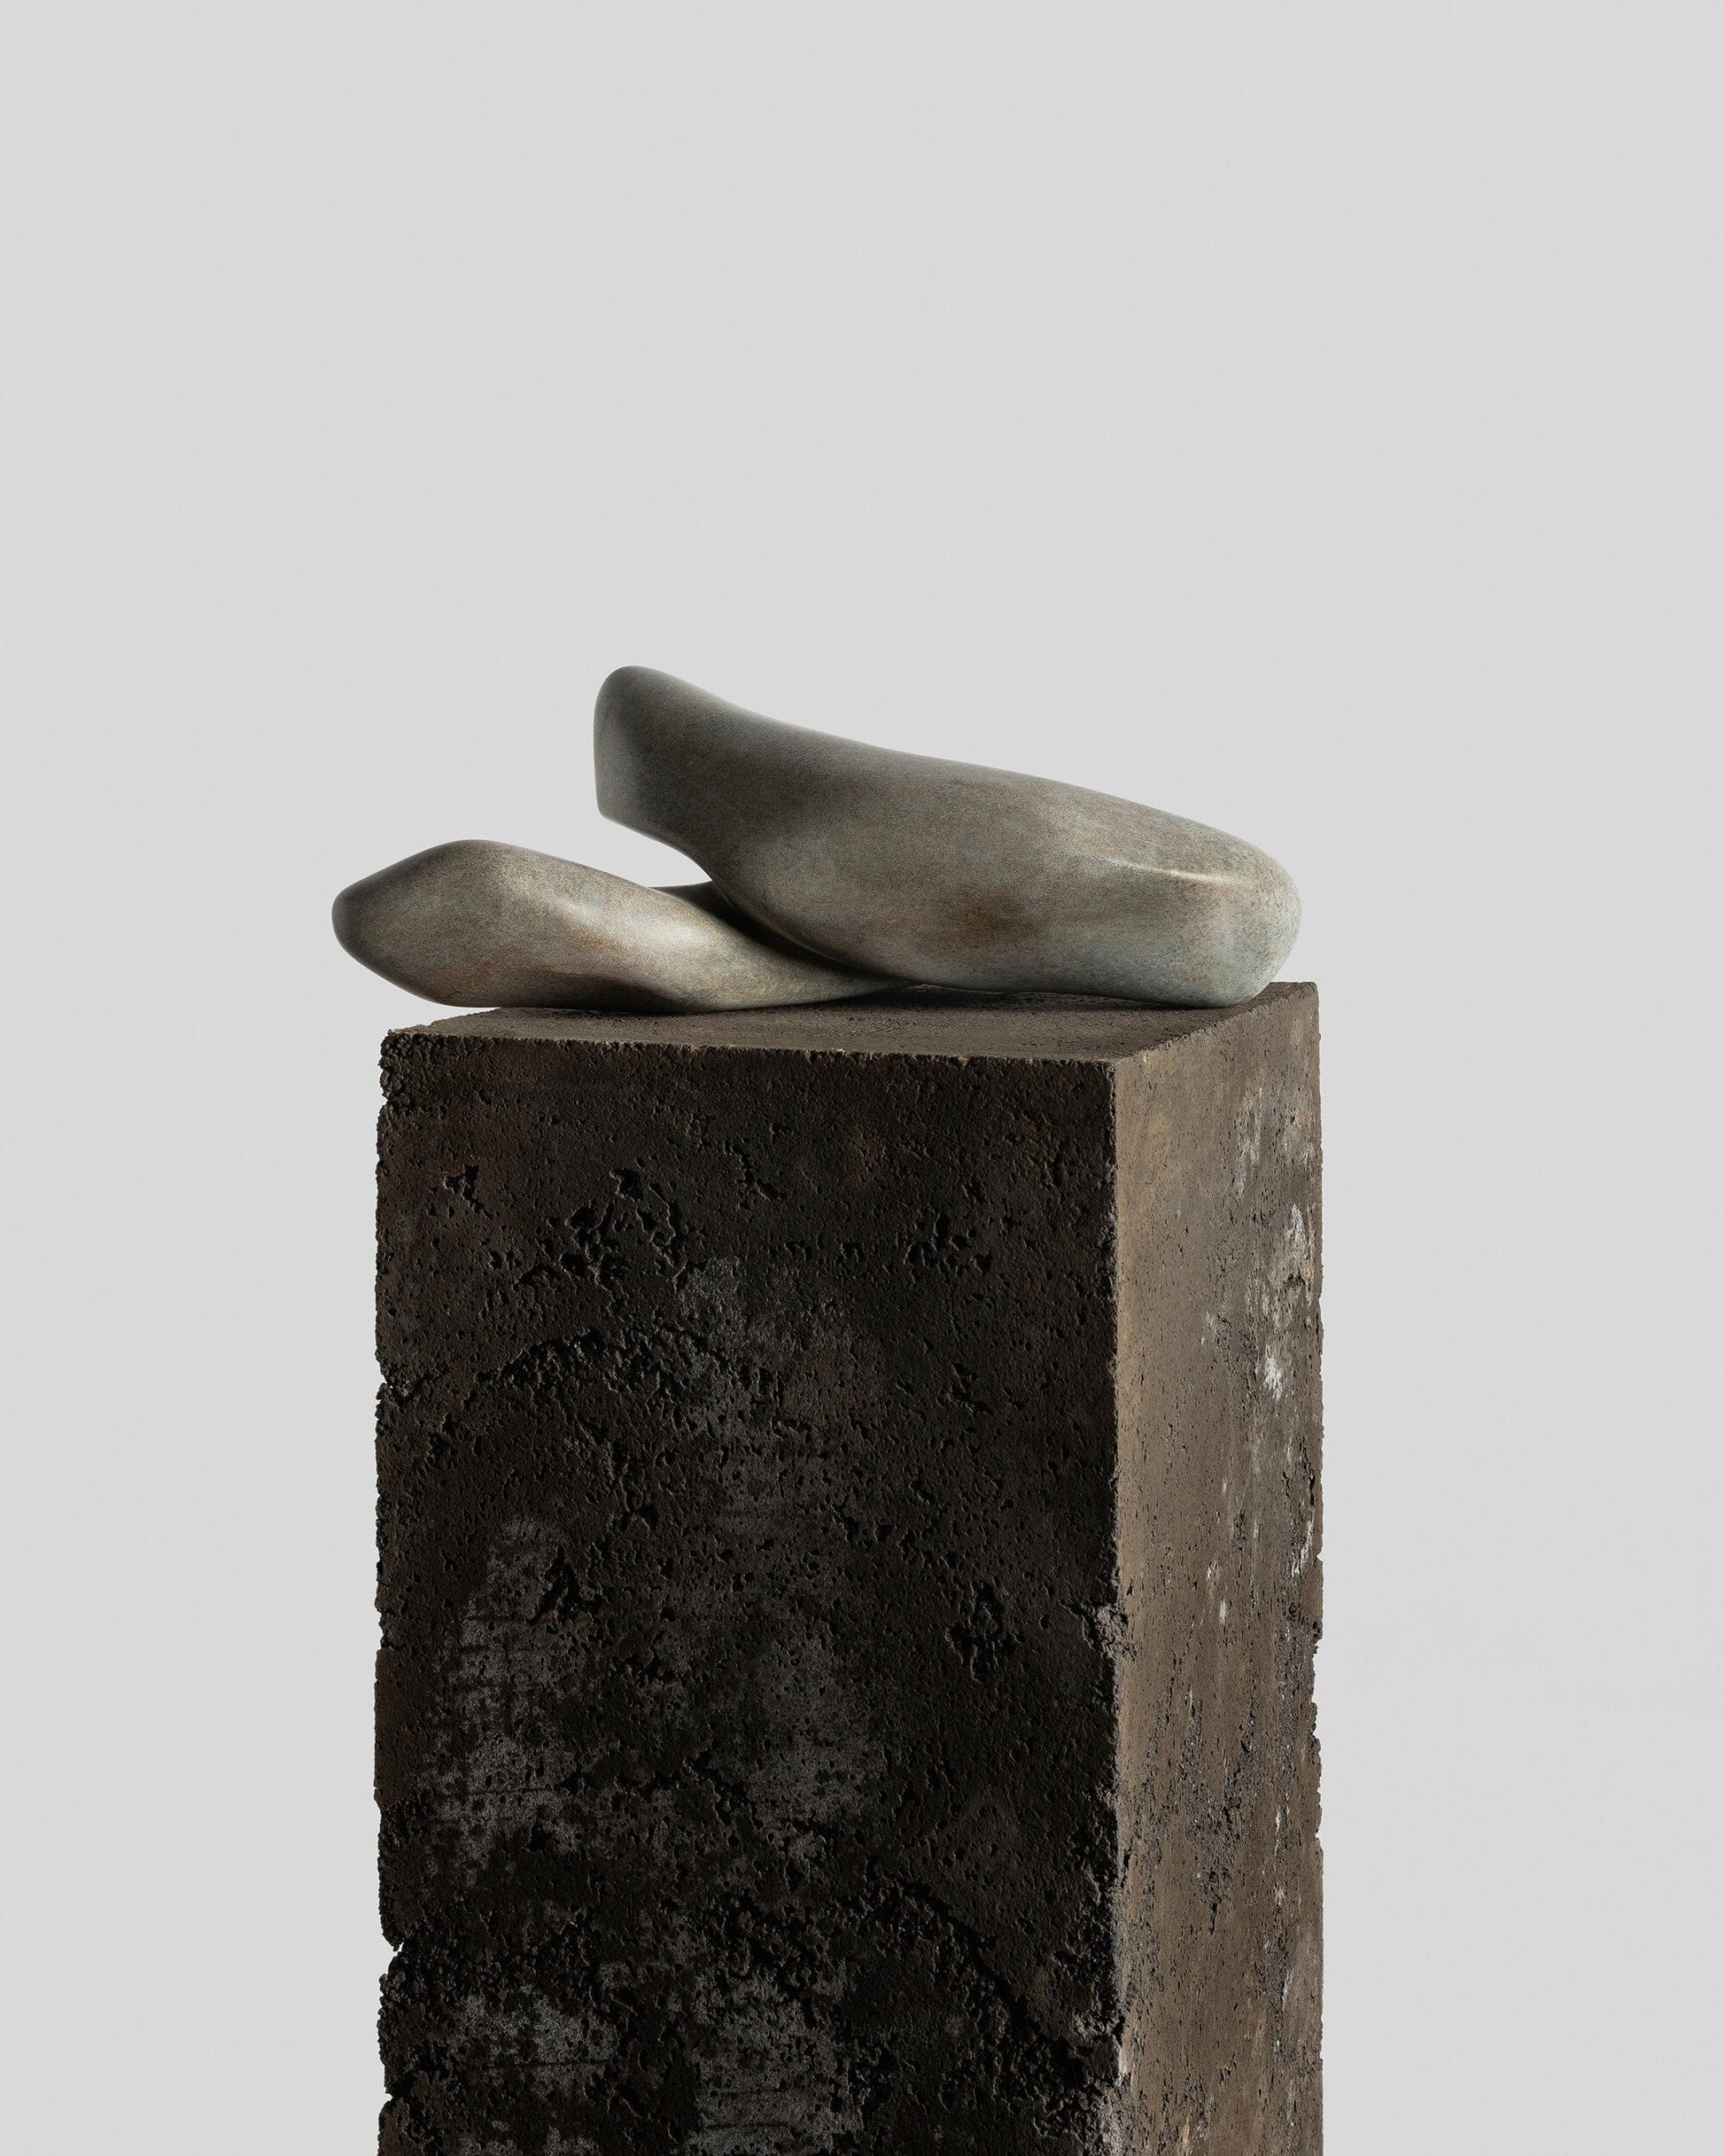 Dual Form III Sculpture by Lisa Dengler